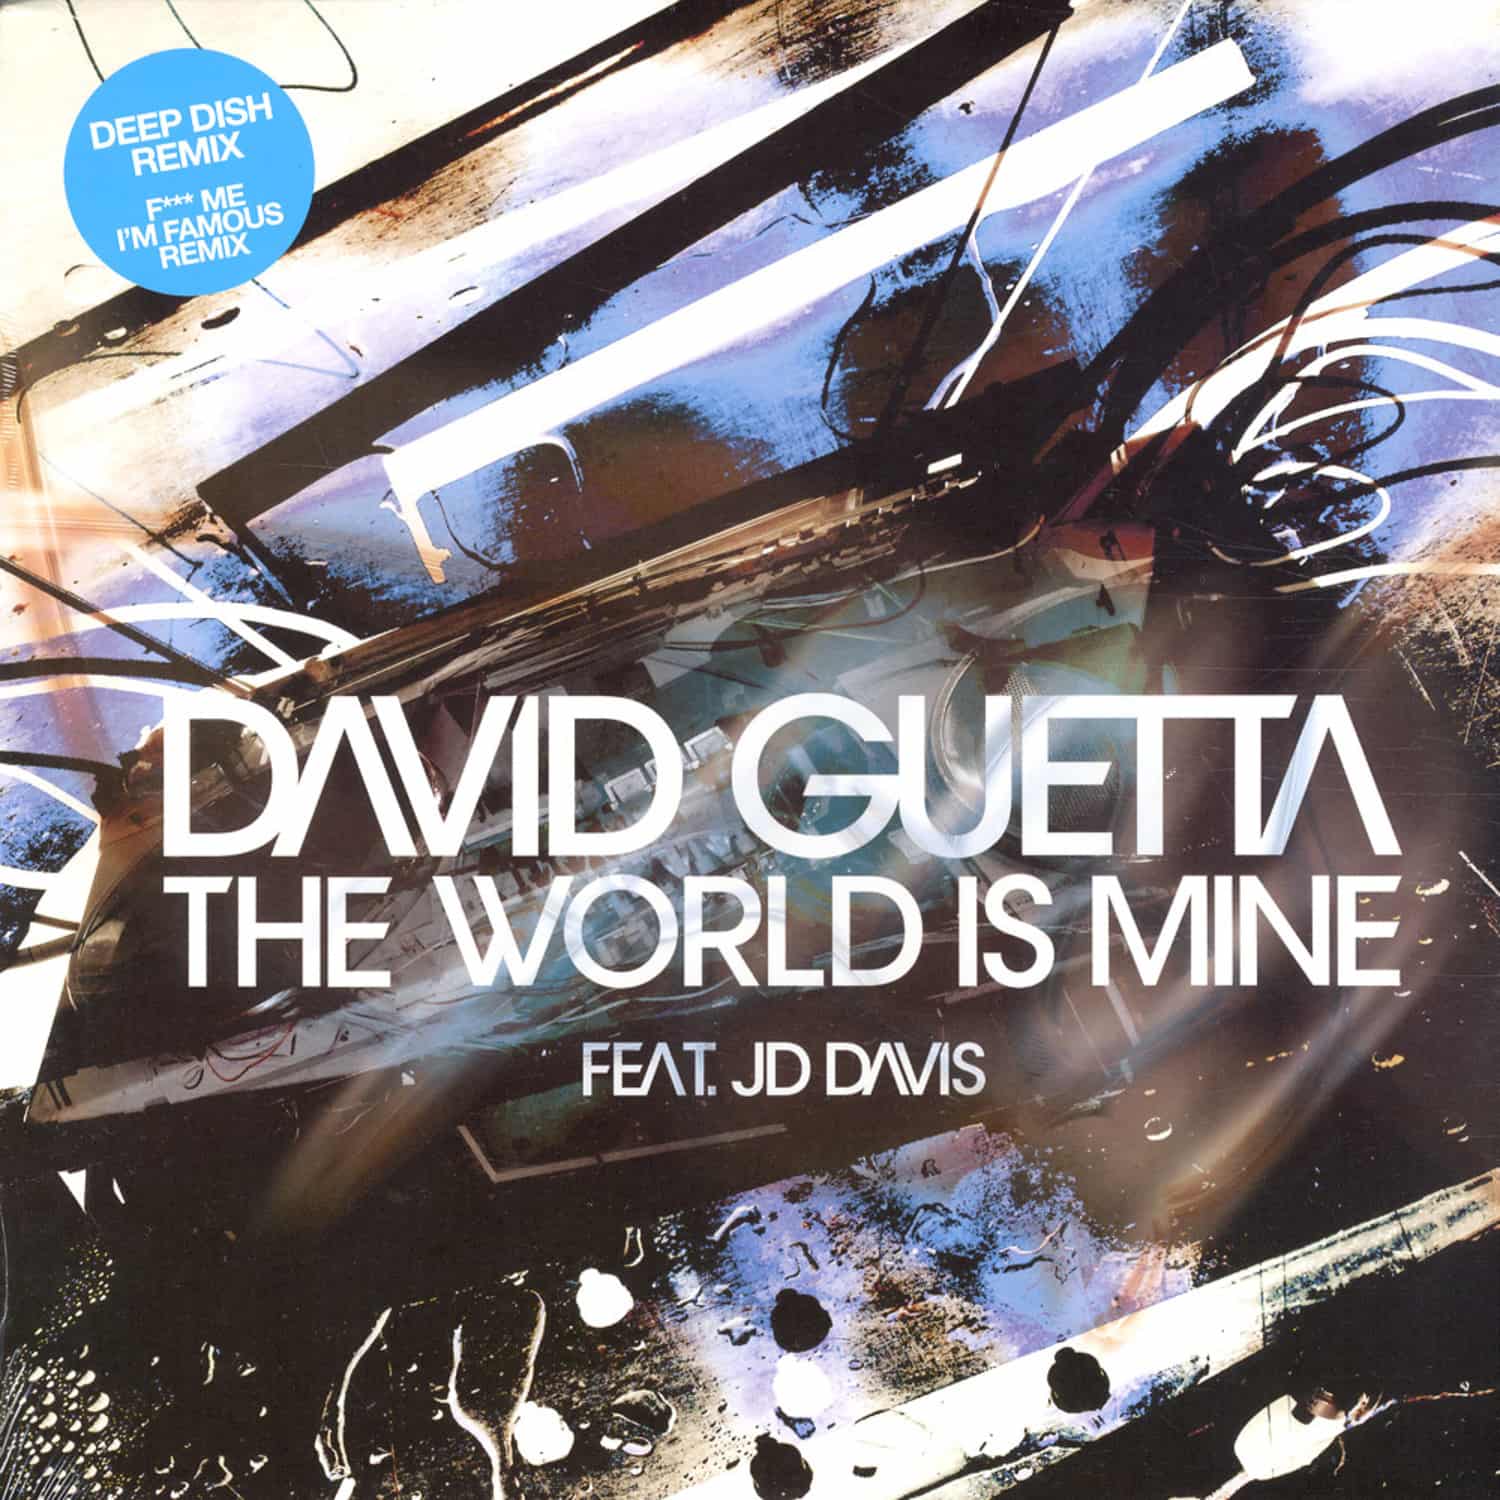 David Guetta Ft JD Davis - THE WORLD IS MINE BLUE/2